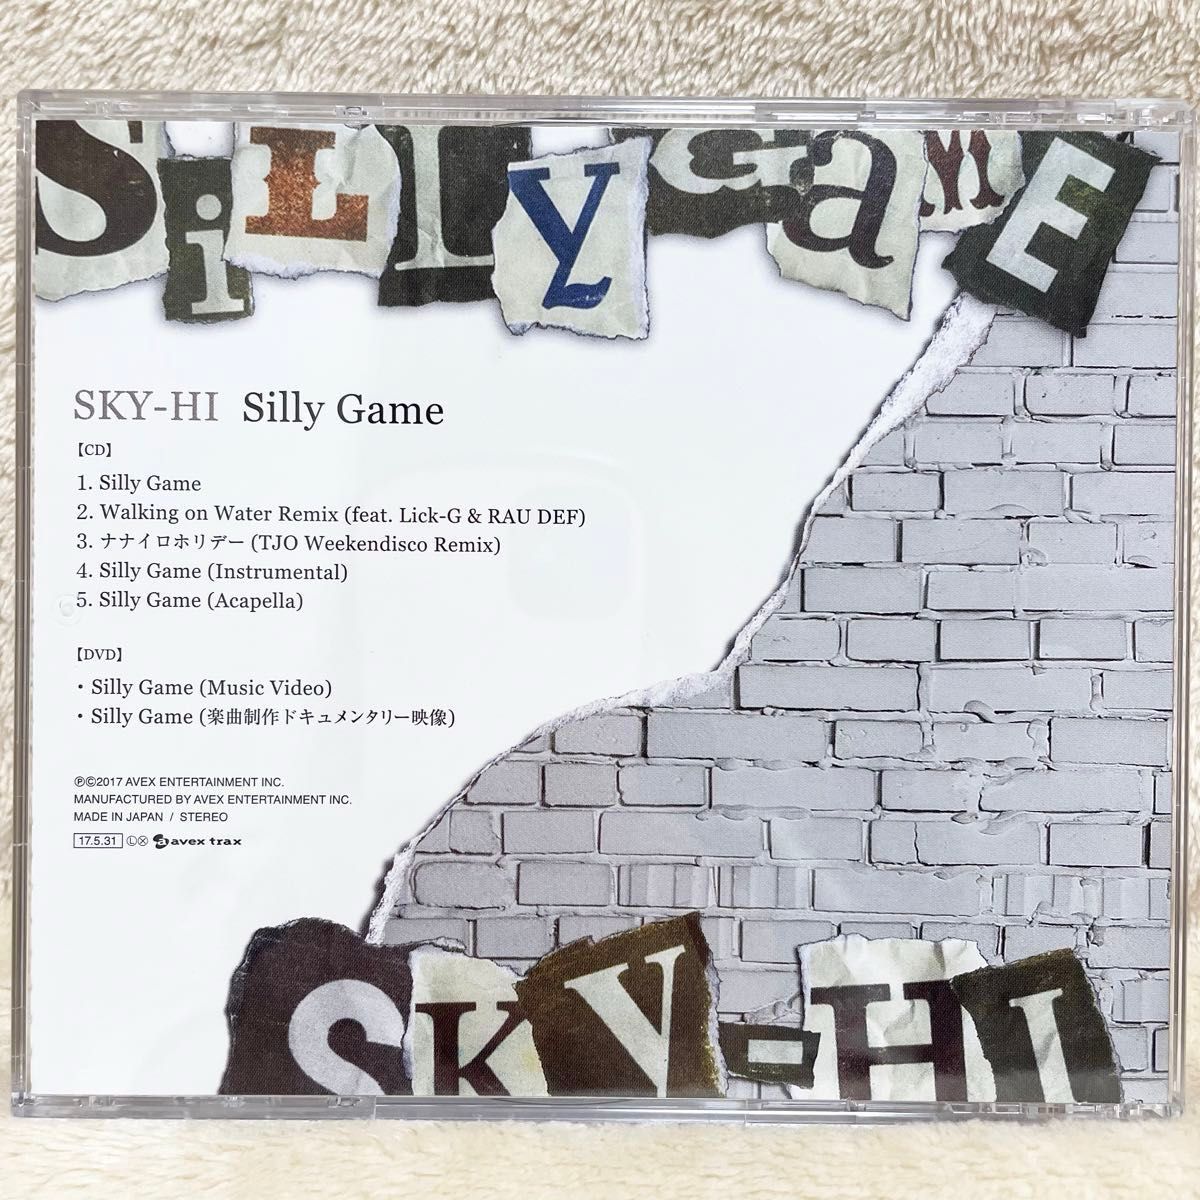 SKY-HI CD、DVDまとめ売り-